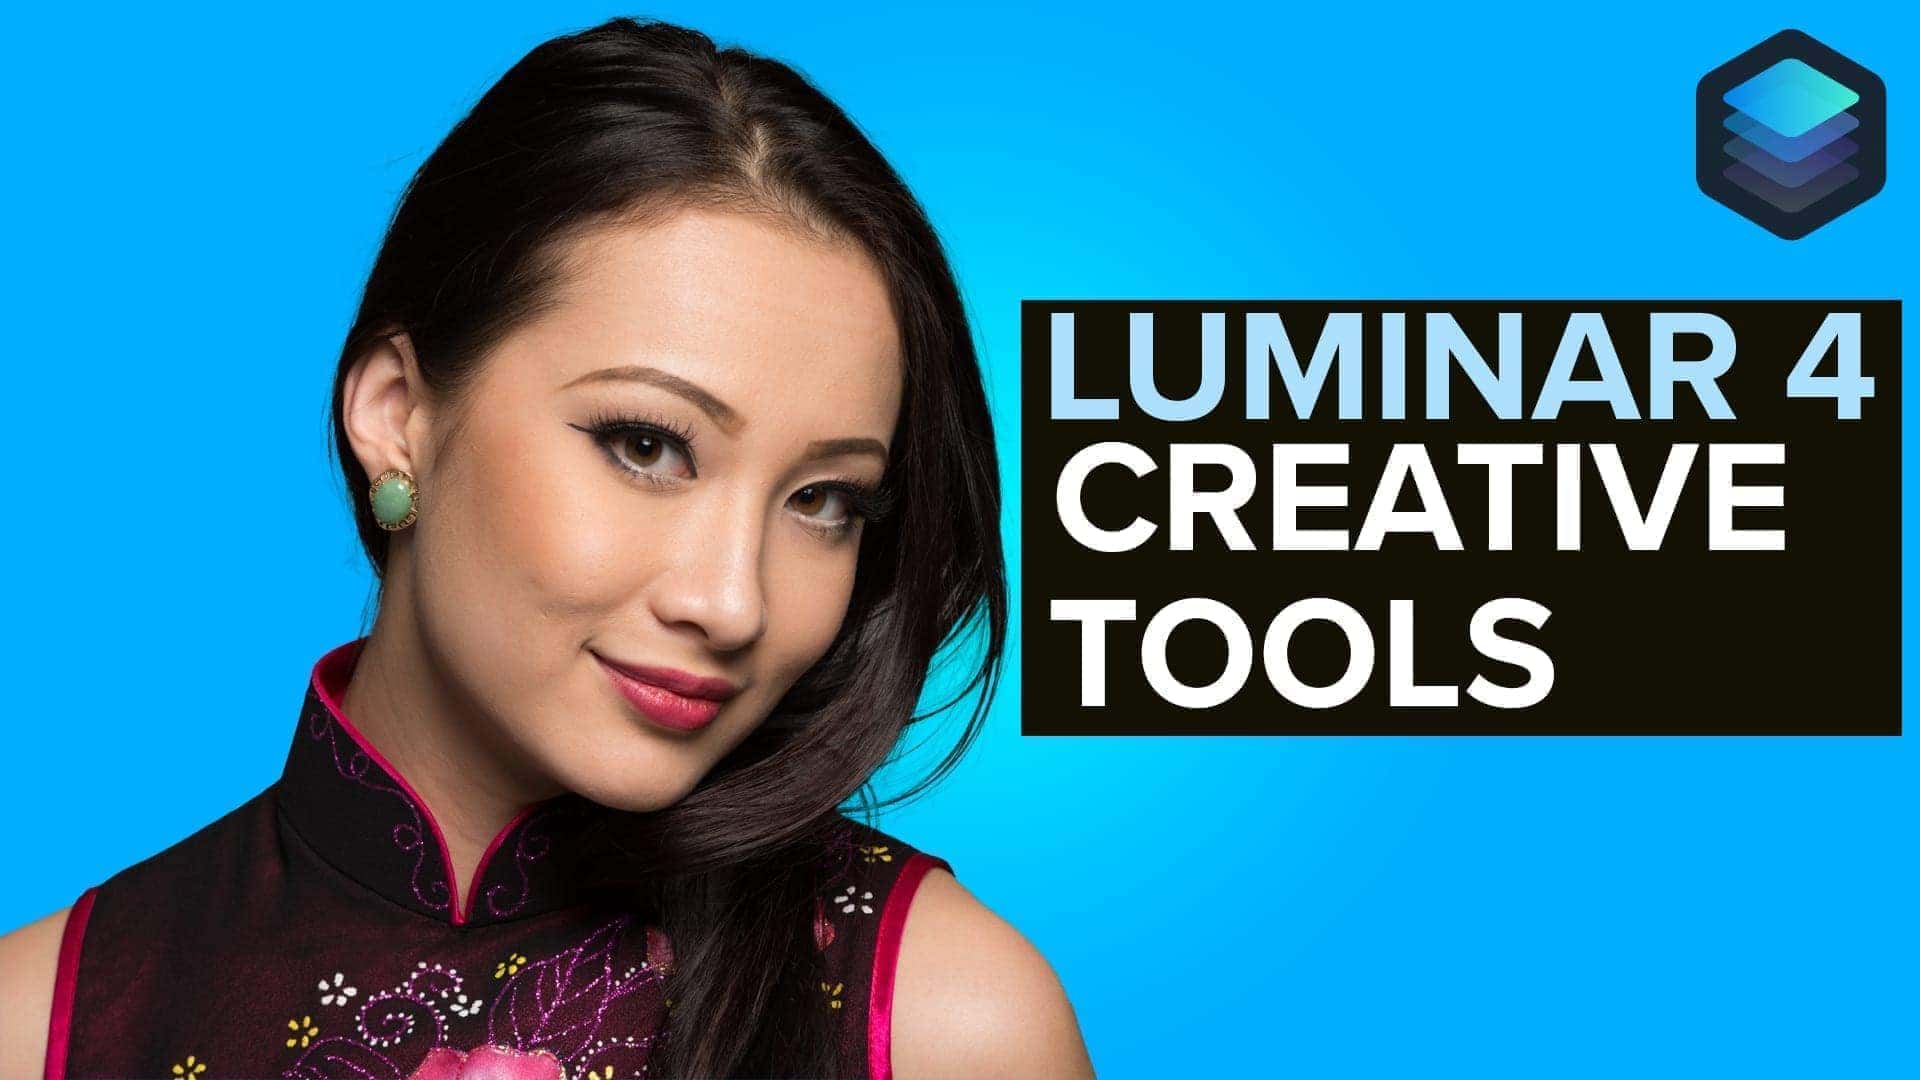 Luminar 4 Creative Tools Overview